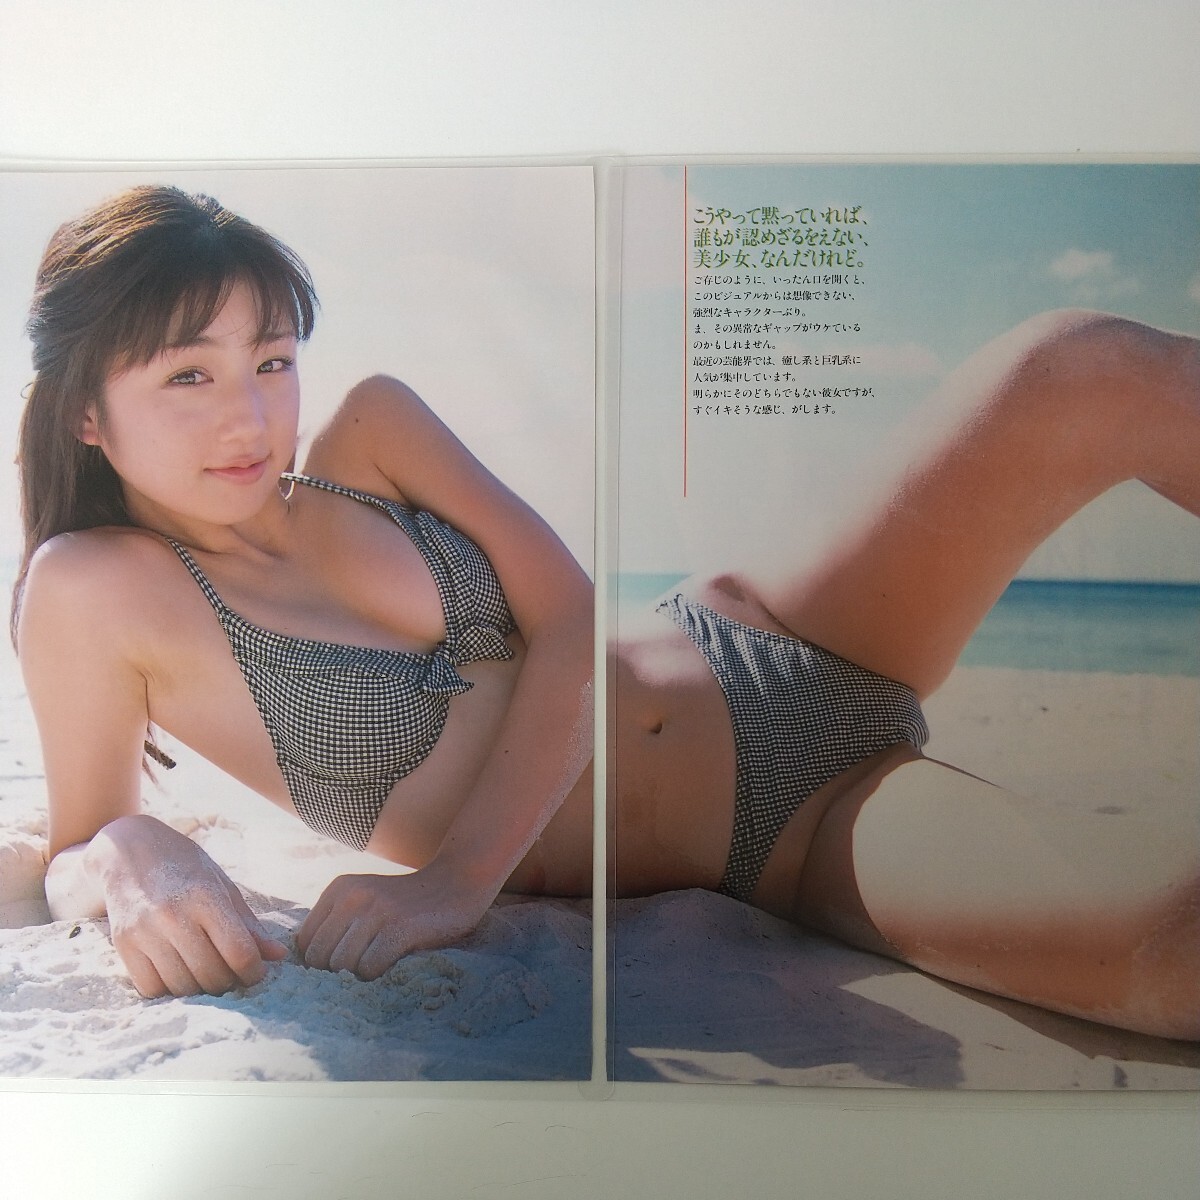 u-074[ magazine gravure laminate processing ][ Ogura Yuuko 18 -years old., body temperature. swimsuit ... rin ] Play Boy Heisei era 14 year 2 month 5 day issue B5 3 sheets 6 page *15